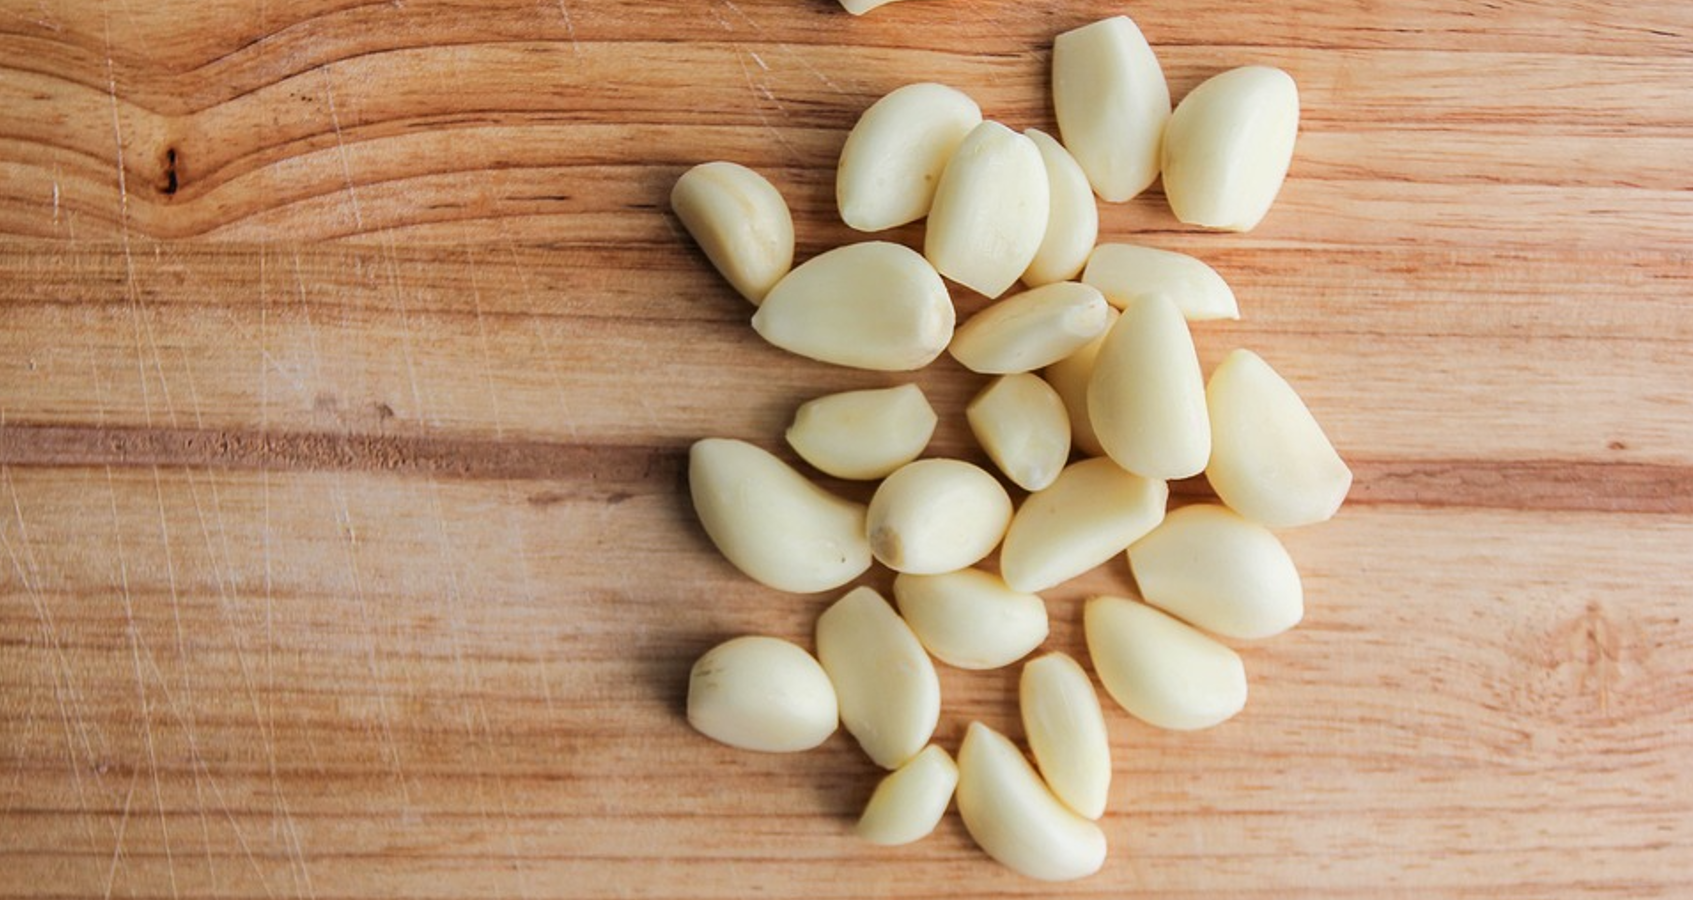 How to store powdered garlic